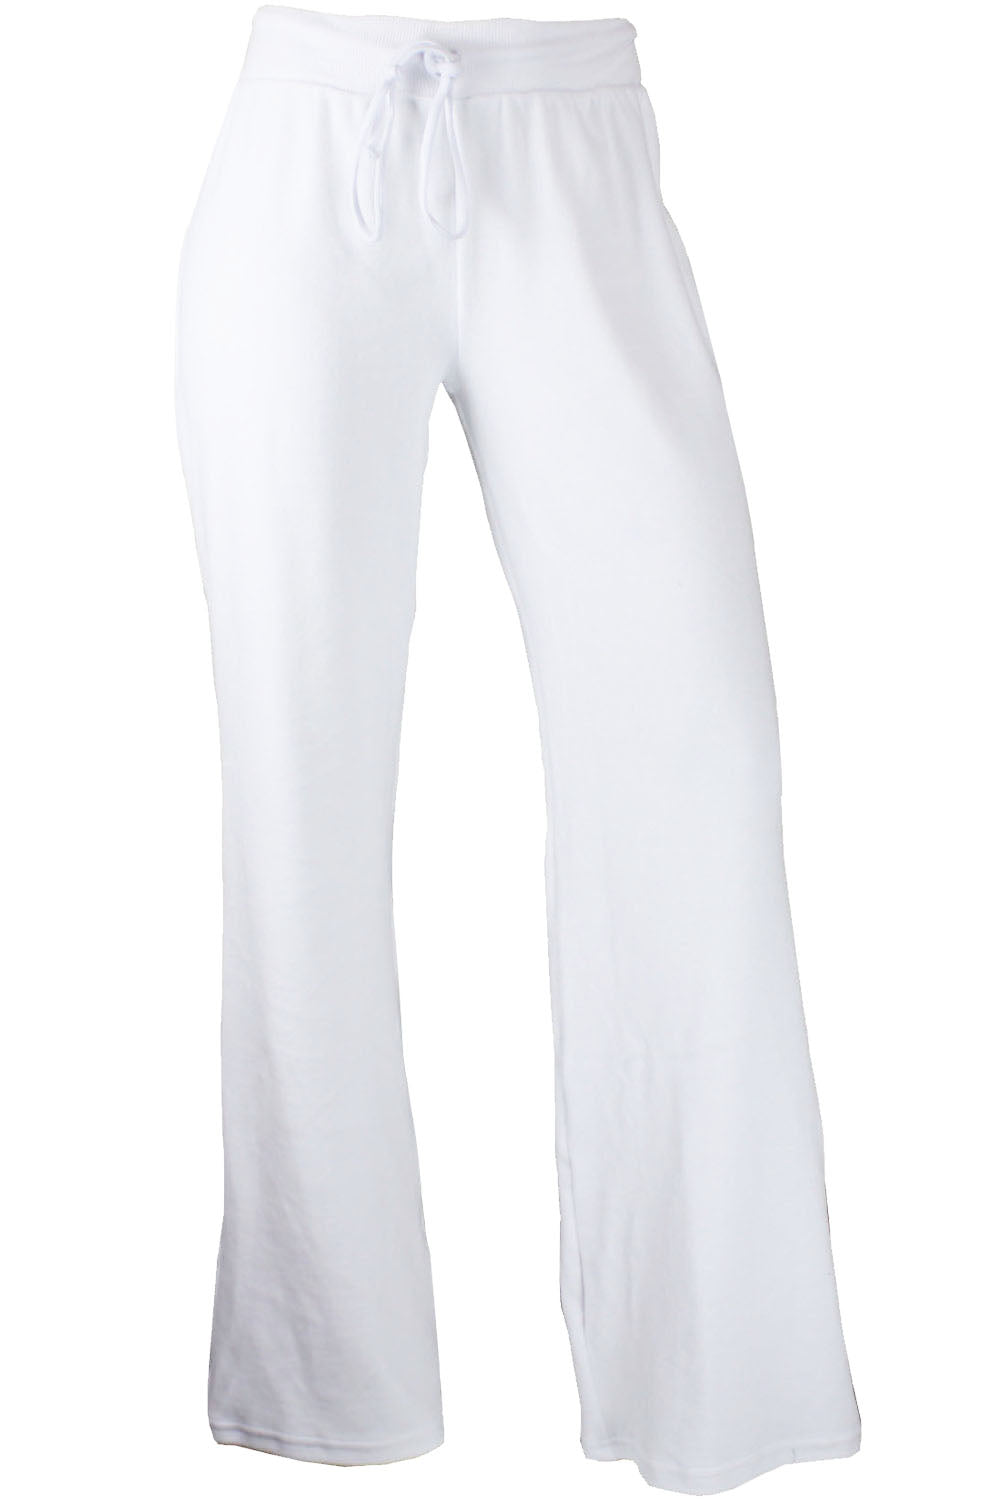 White Velour Lounge Pants